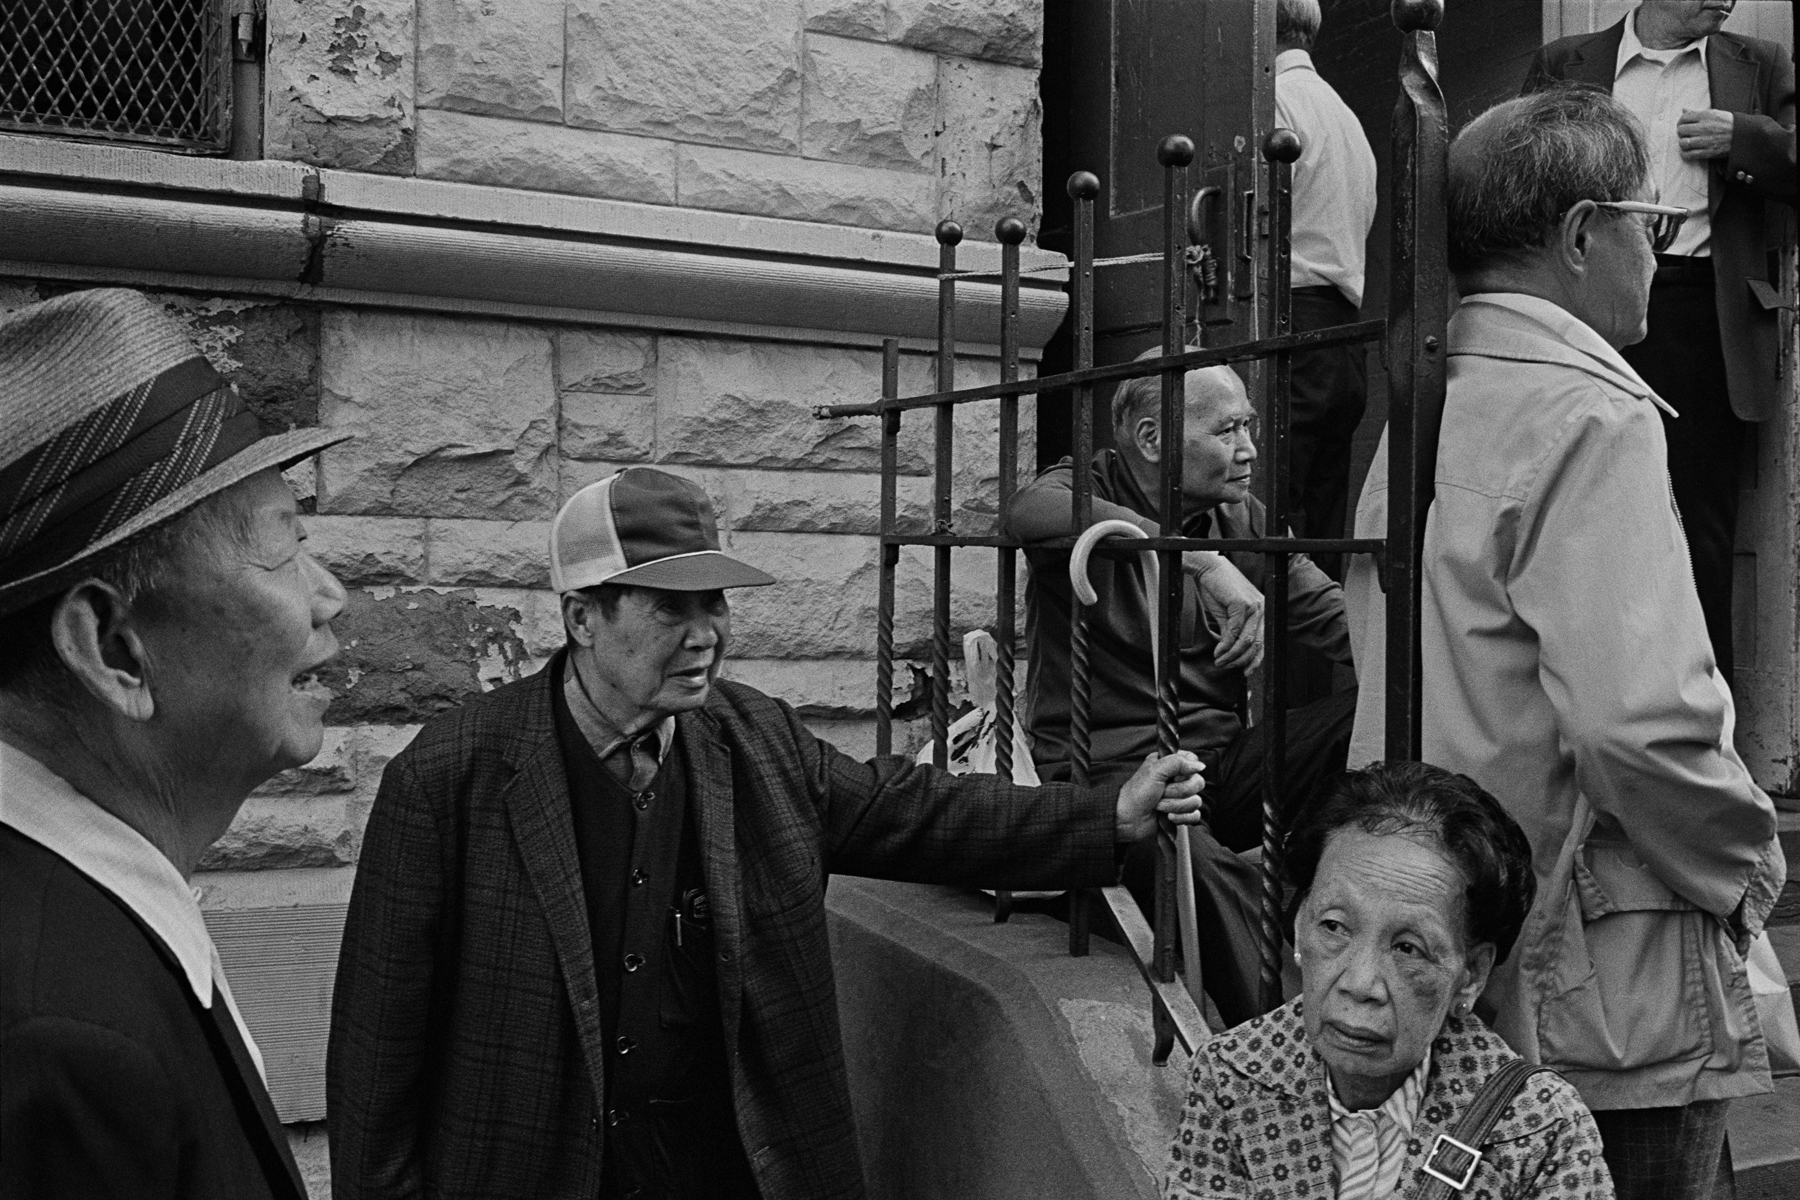 Chinatown Senior Citizens’ Center, Bayard St., New York City, 1982.